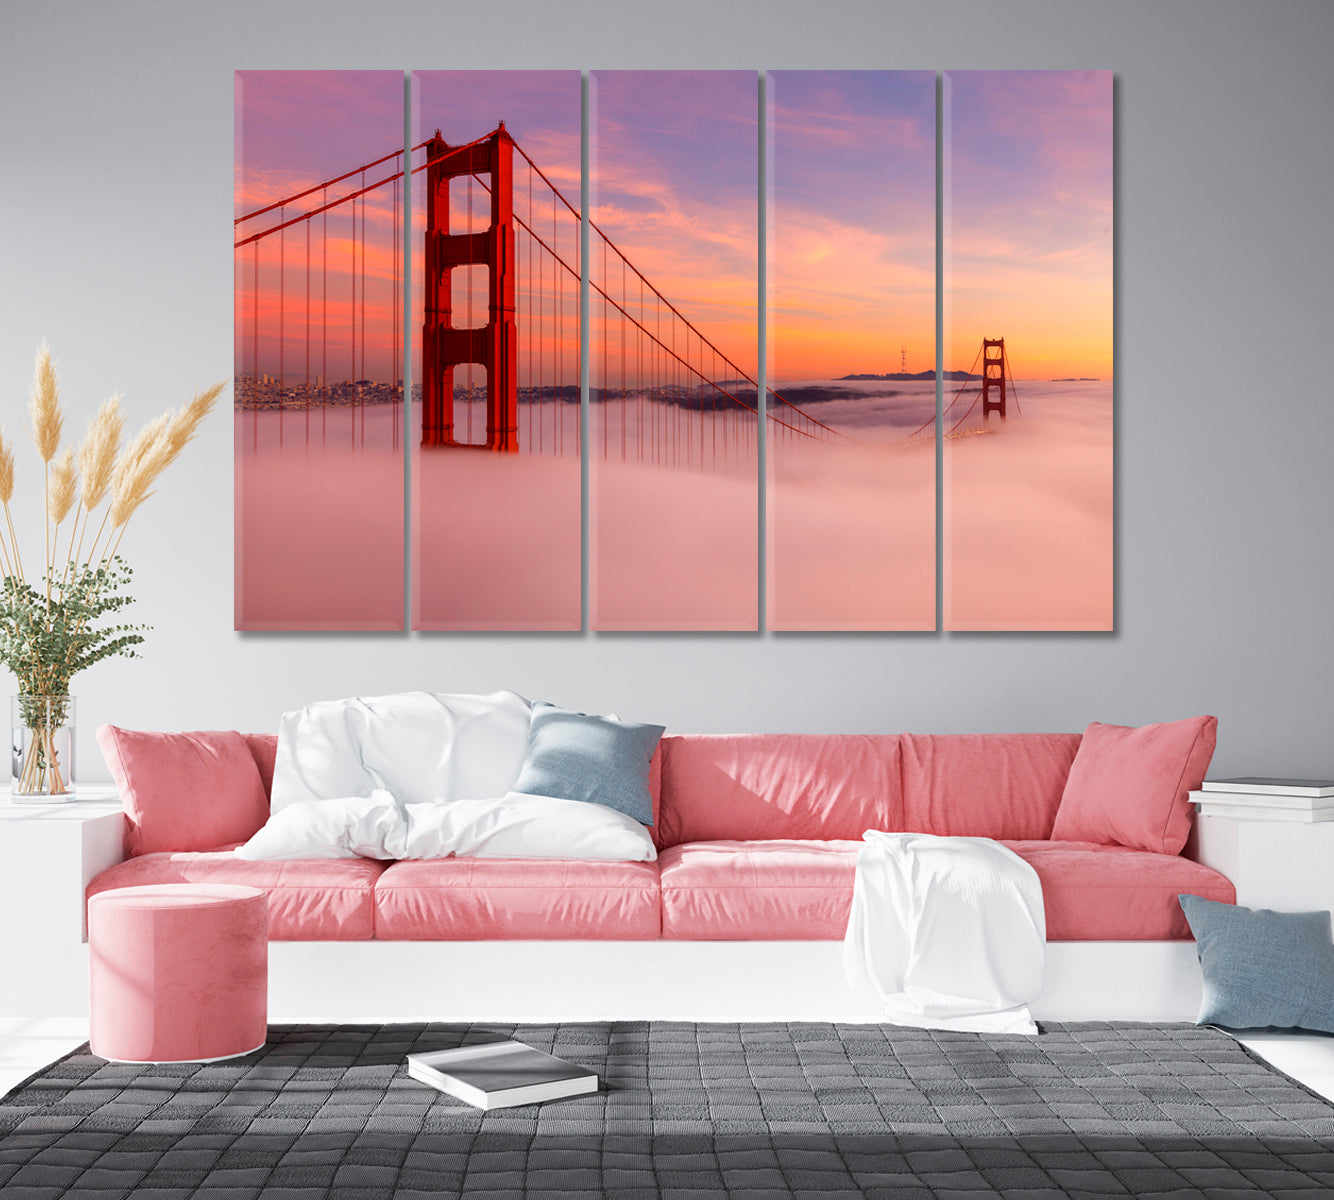 Golden Gate Bridge in the Fog San Francisco Canvas Print-Canvas Print-CetArt-1 Panel-24x16 inches-CetArt